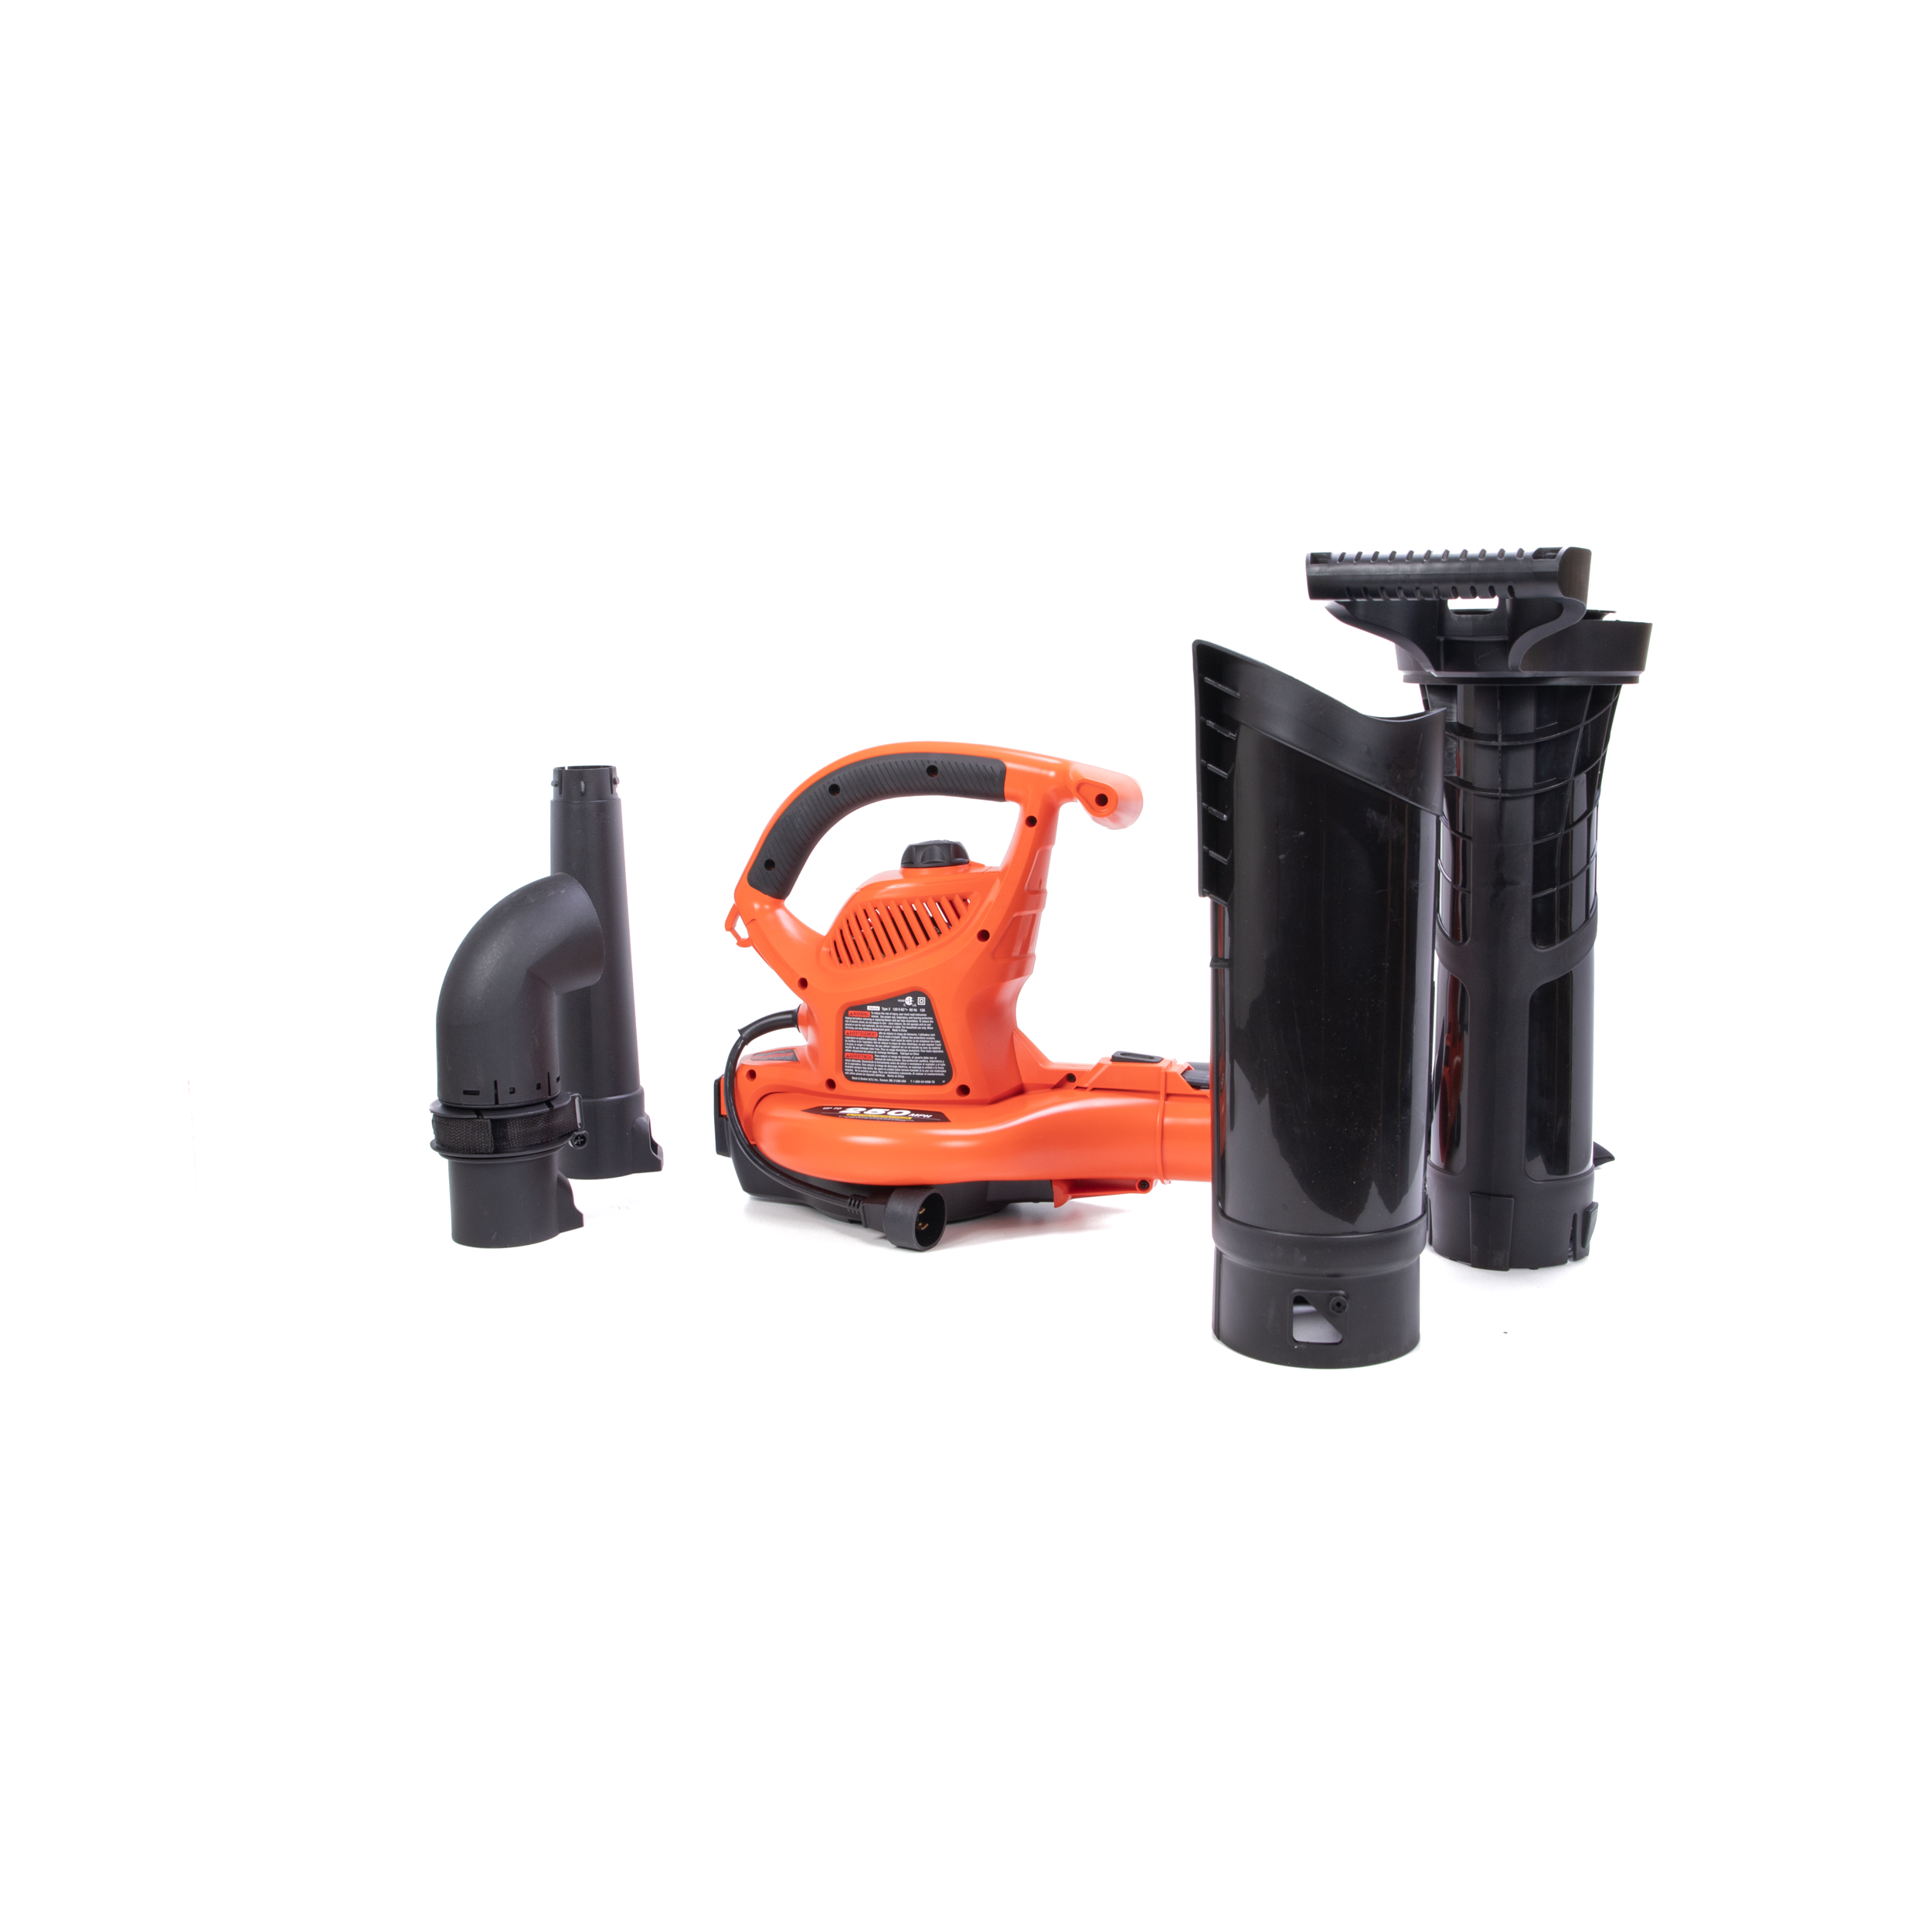 Review Black & Decker Leaf Blower & Vacuum 3 in 1 BV6000 How to